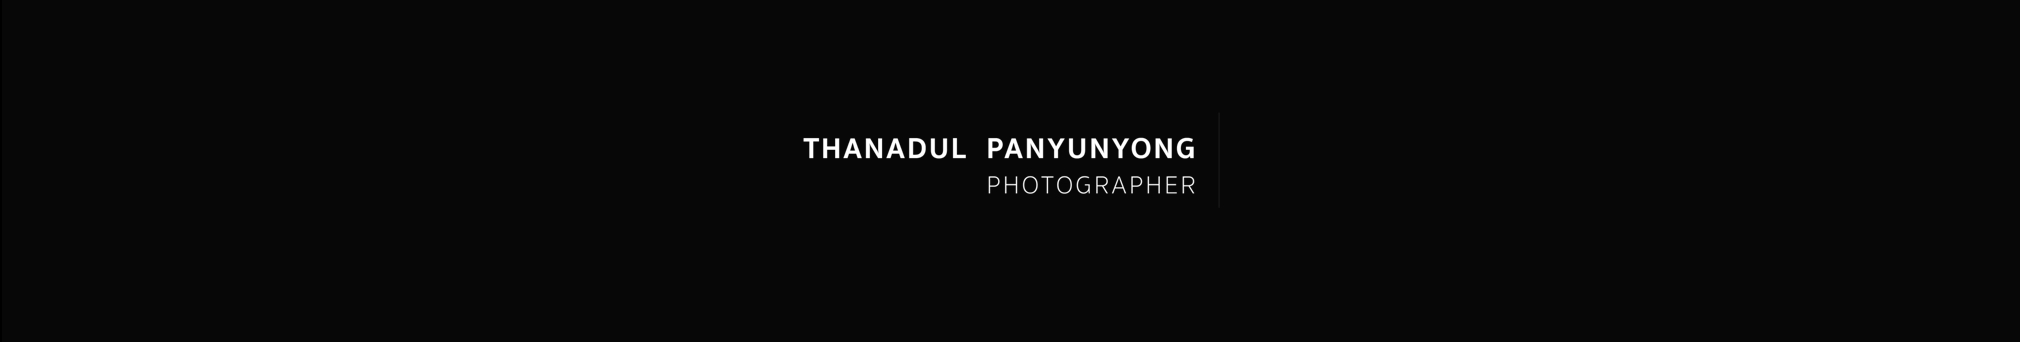 Thanadul Panyunyong's profile banner